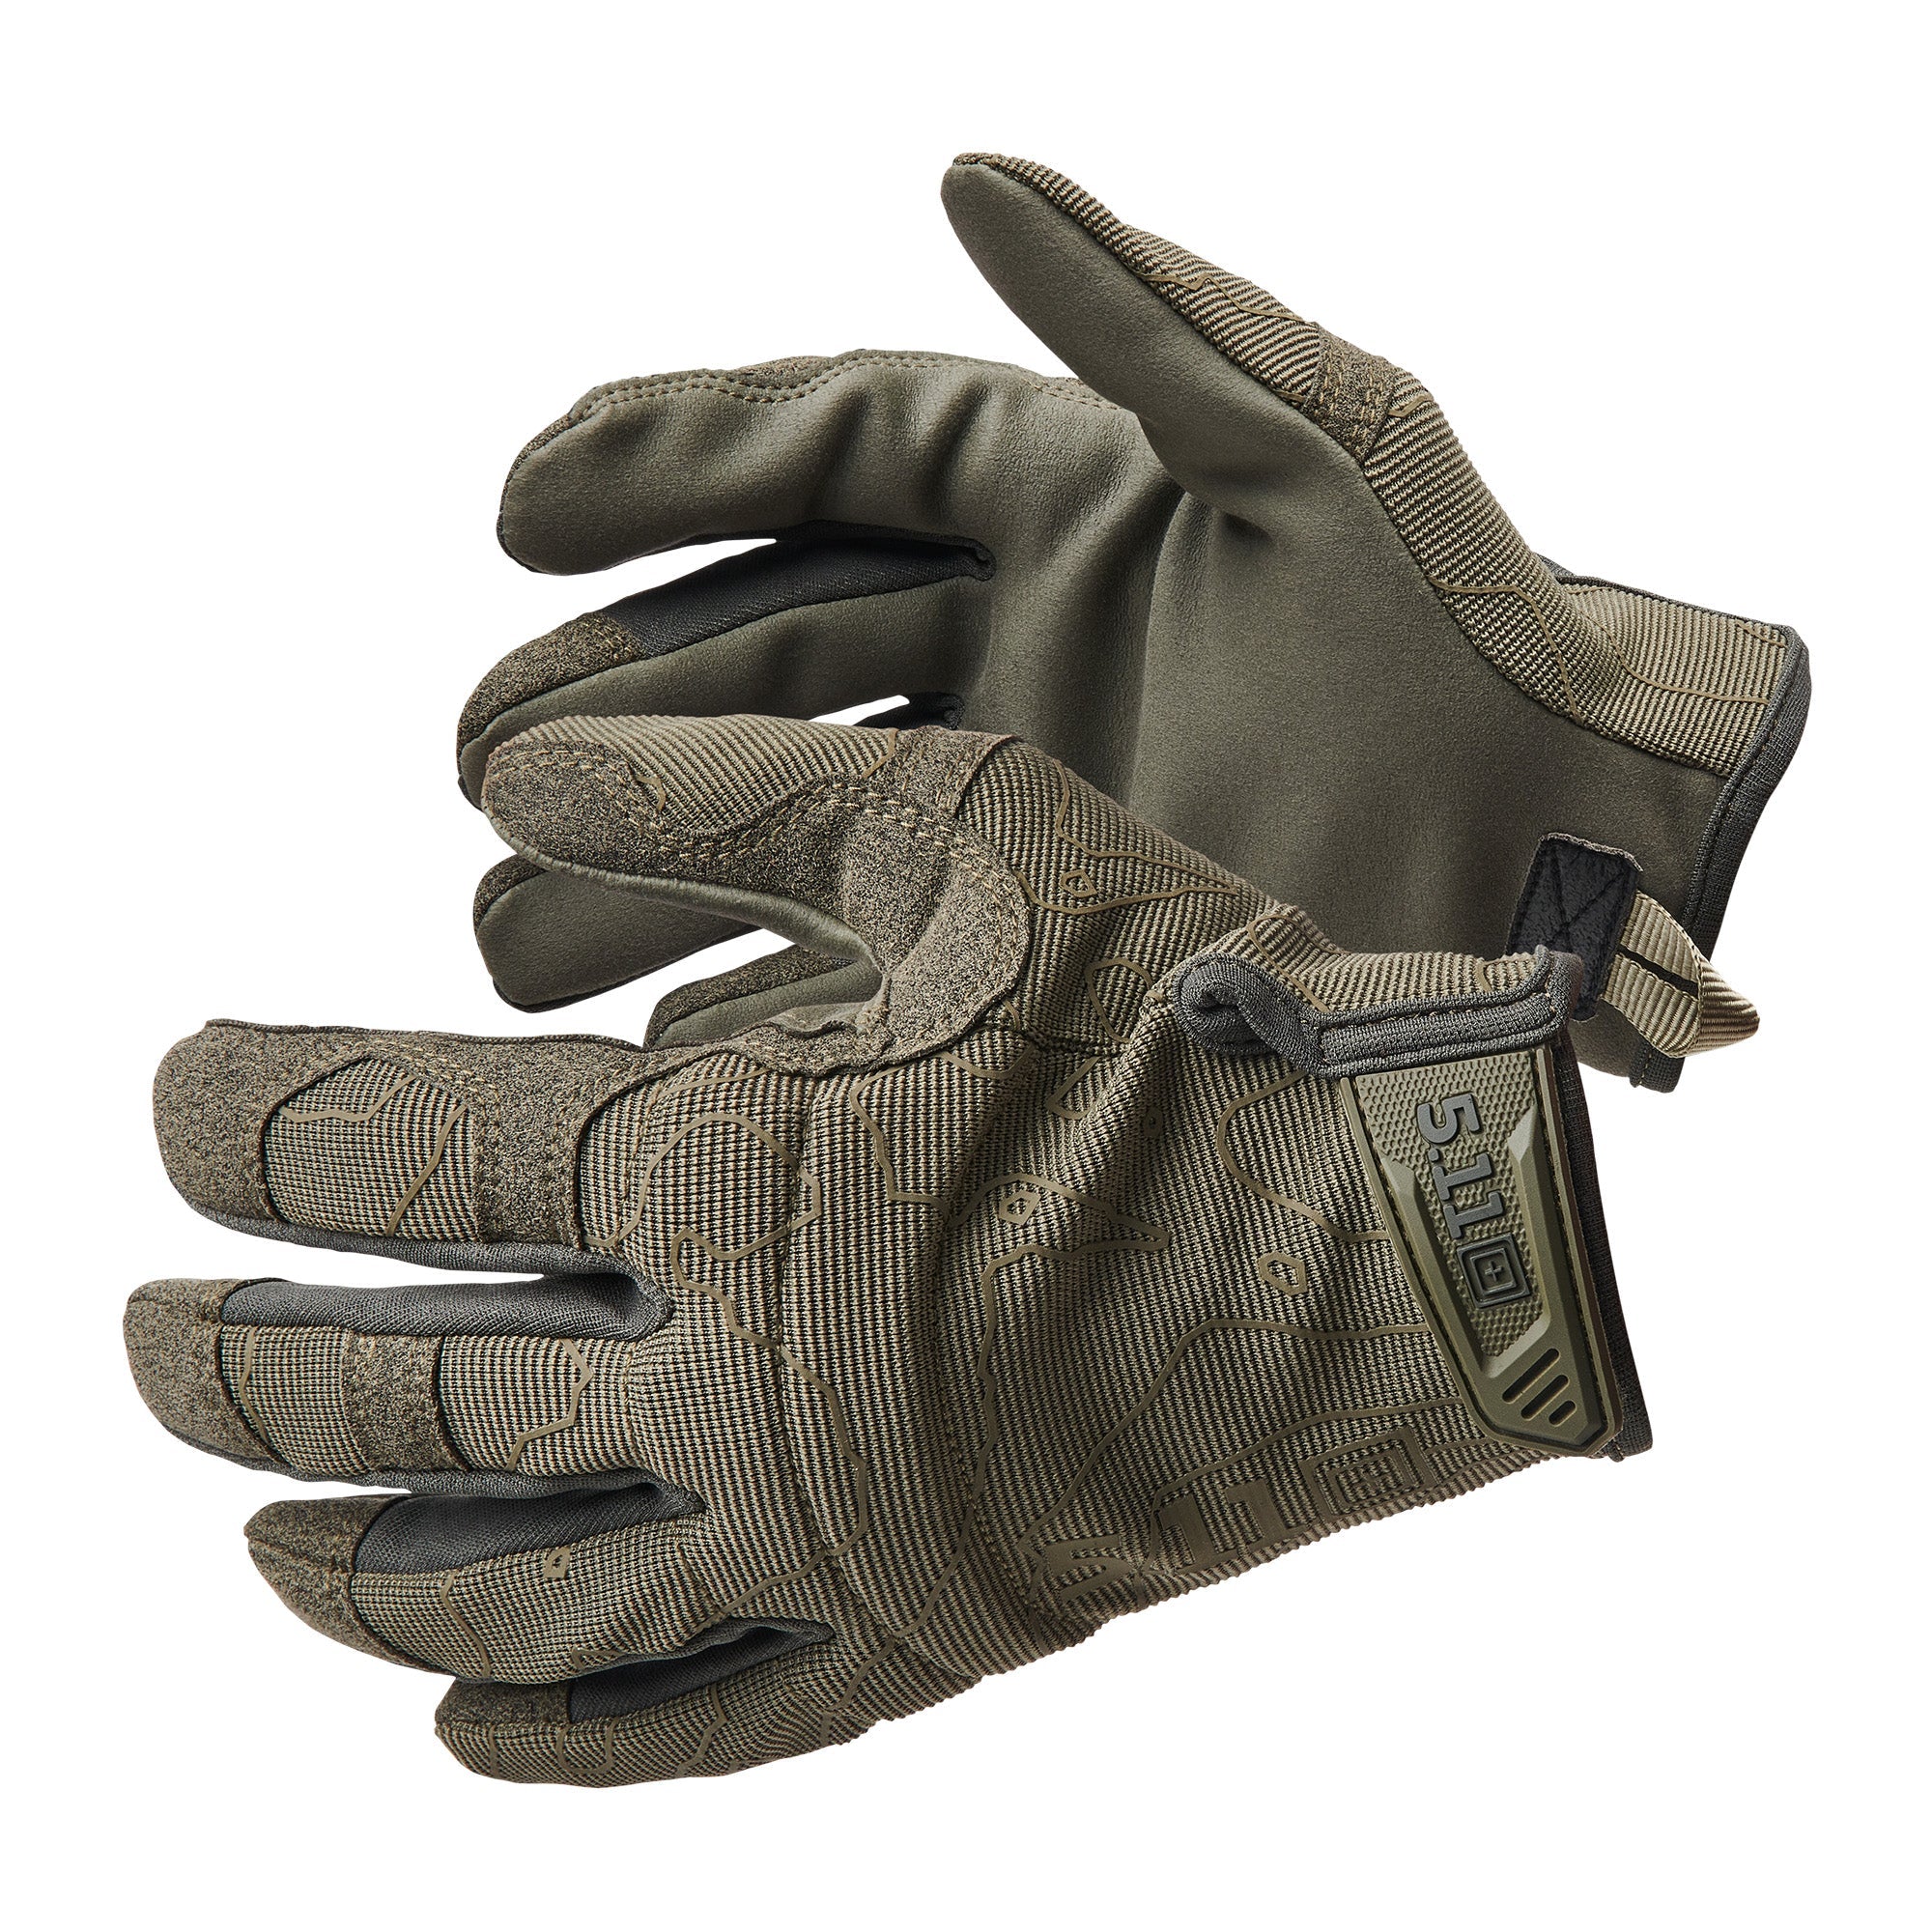 5.11 Tactical High Abrasion 2.0 Glove Tactical Gear Australia Supplier Distributor Dealer